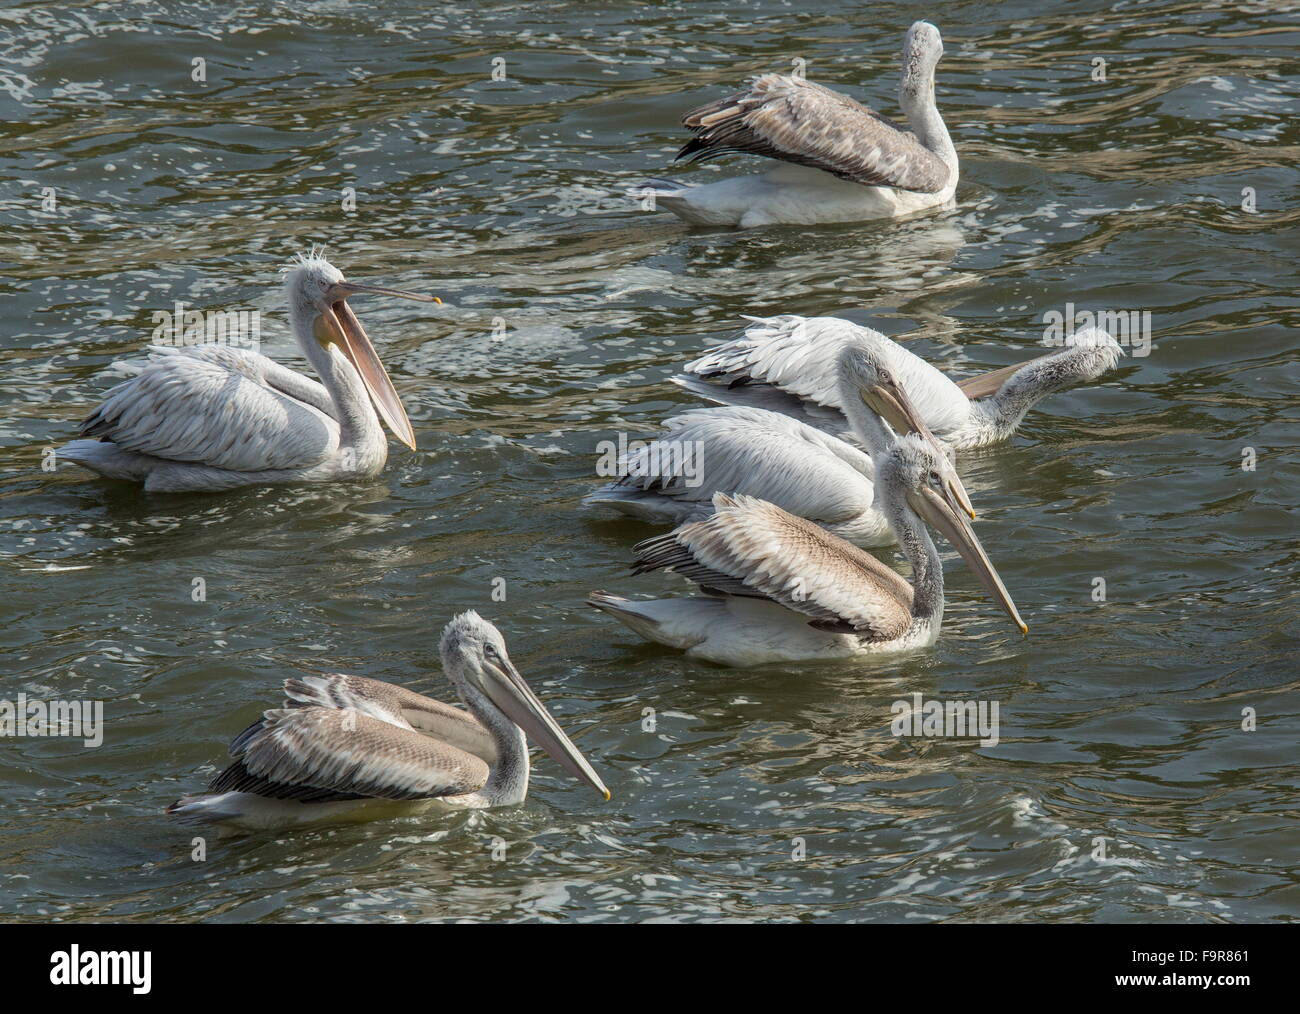 Dalmatinische Pelikane füttern am Fluss Outfall, See Kerkini Nord Griechenland. Stockfoto